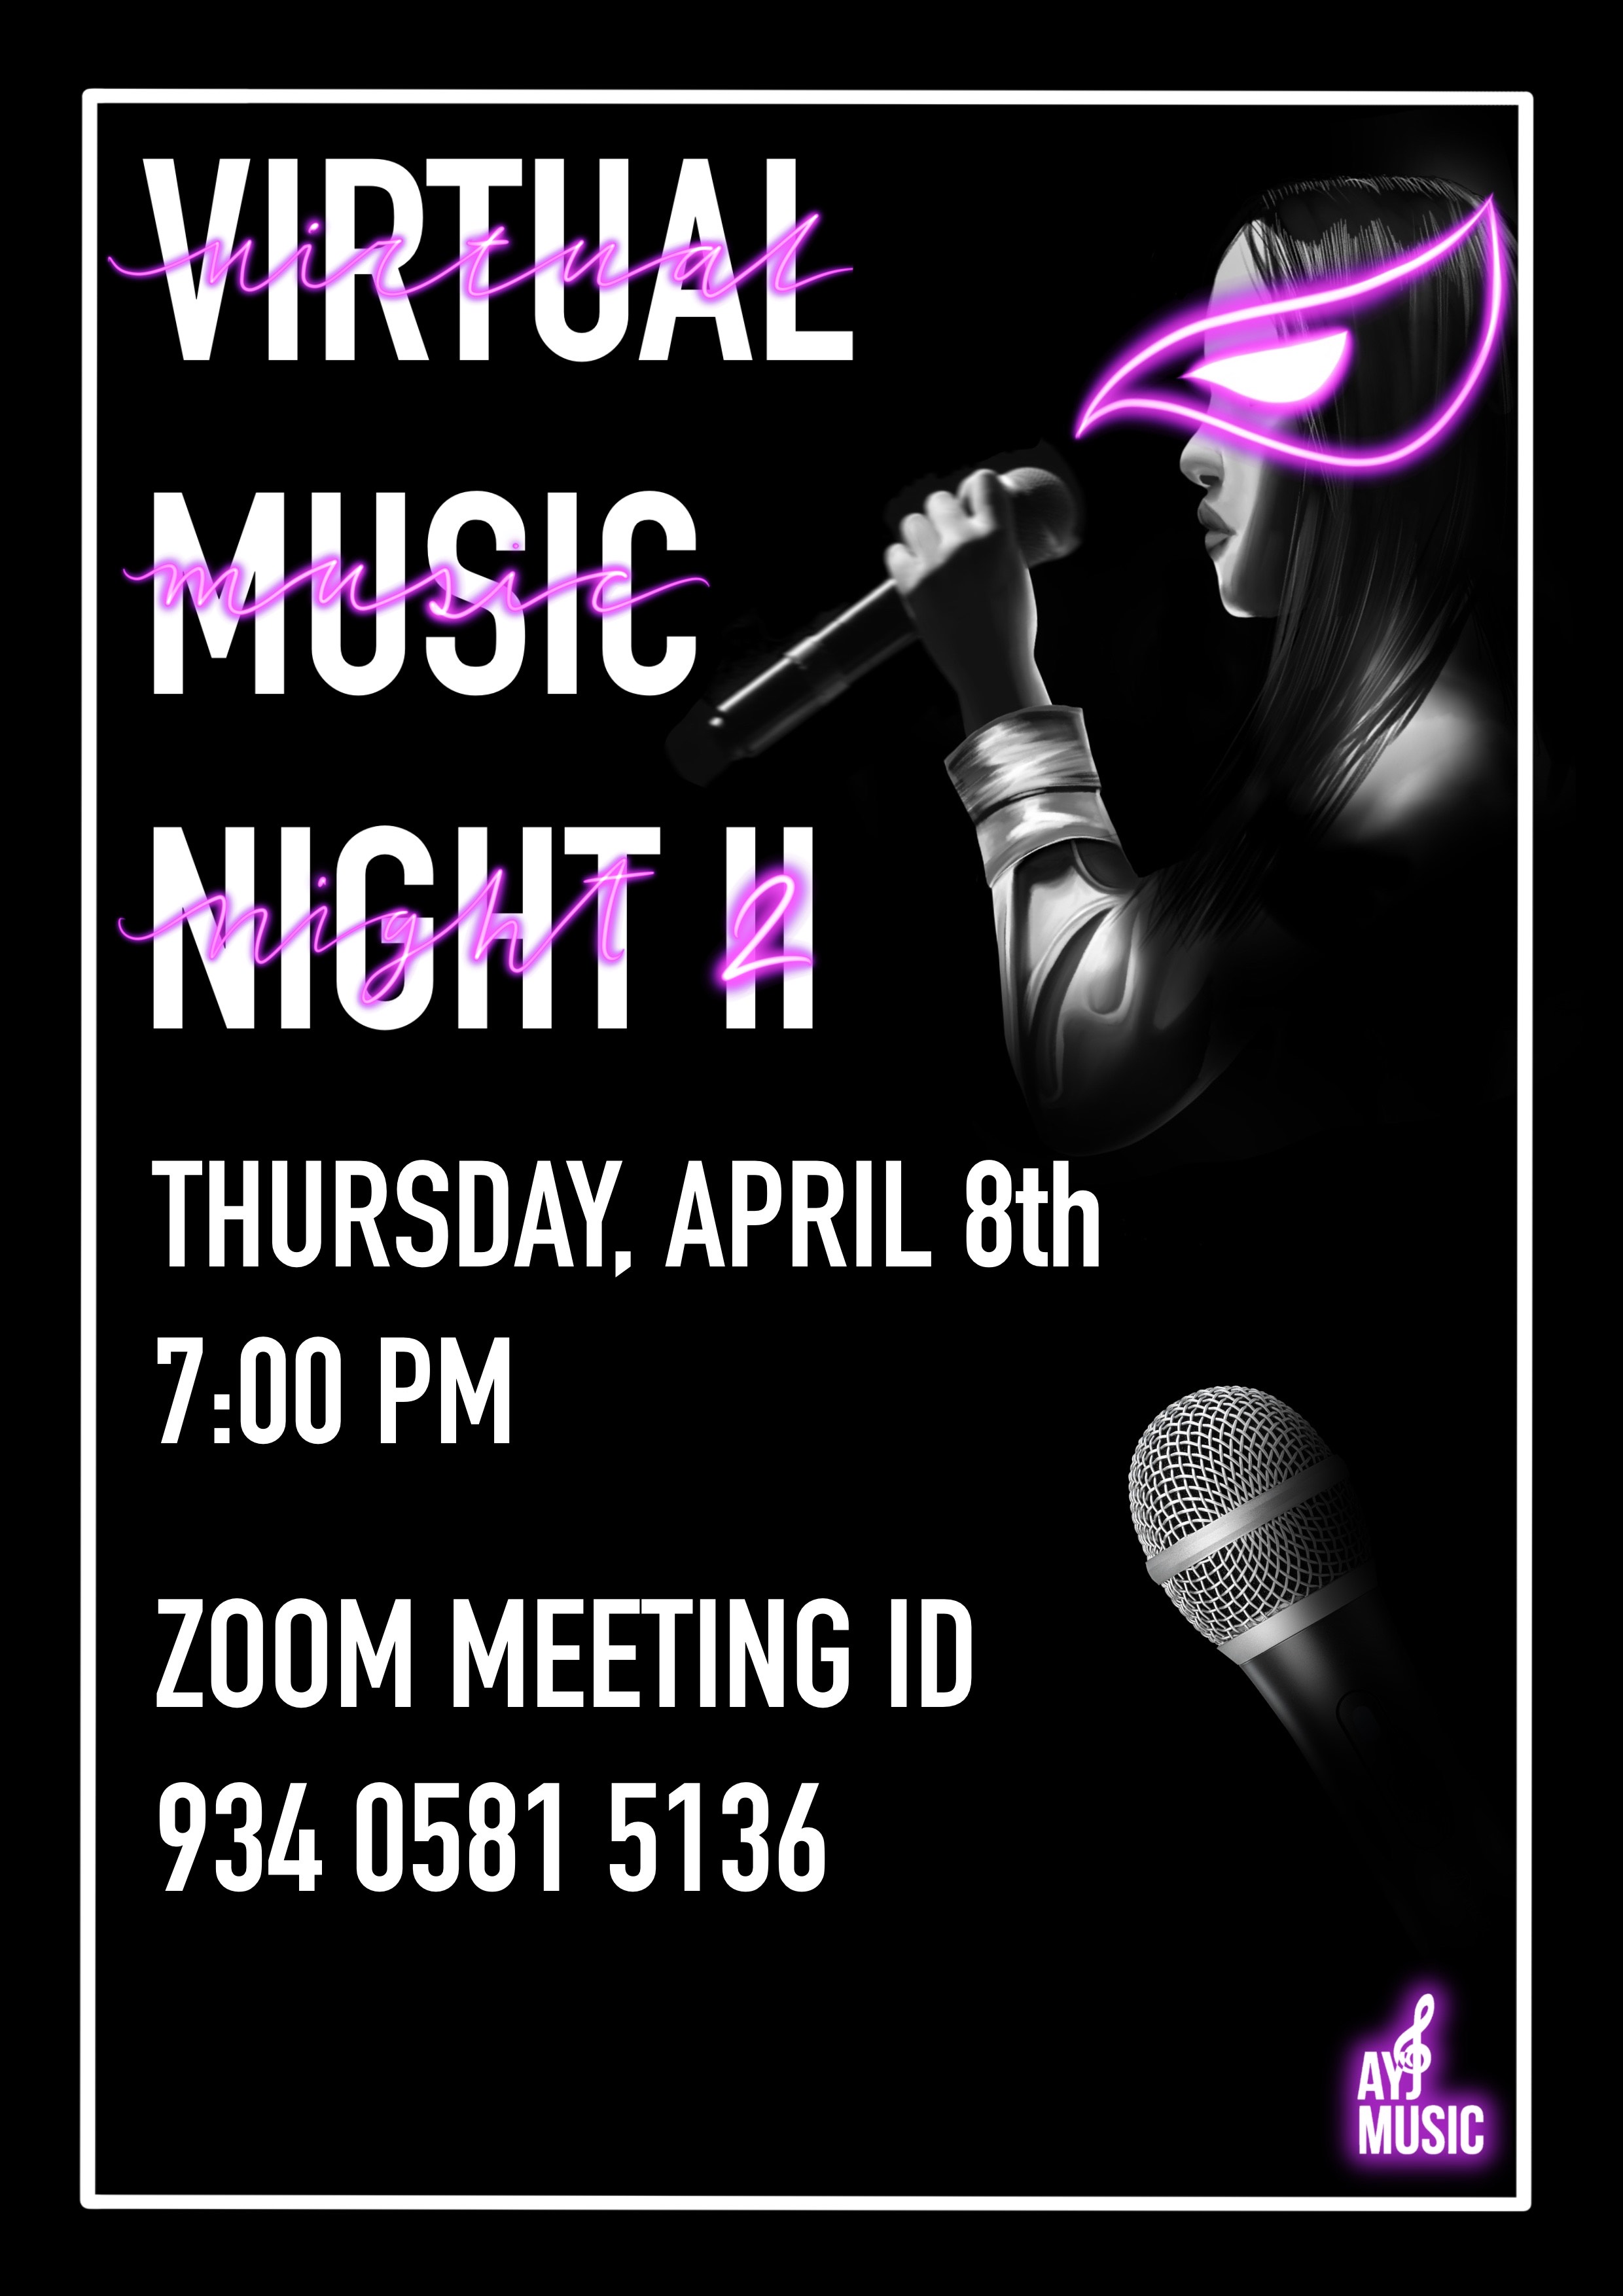 Virtual Music Night - Thursday, April 8th at 7:00 pm